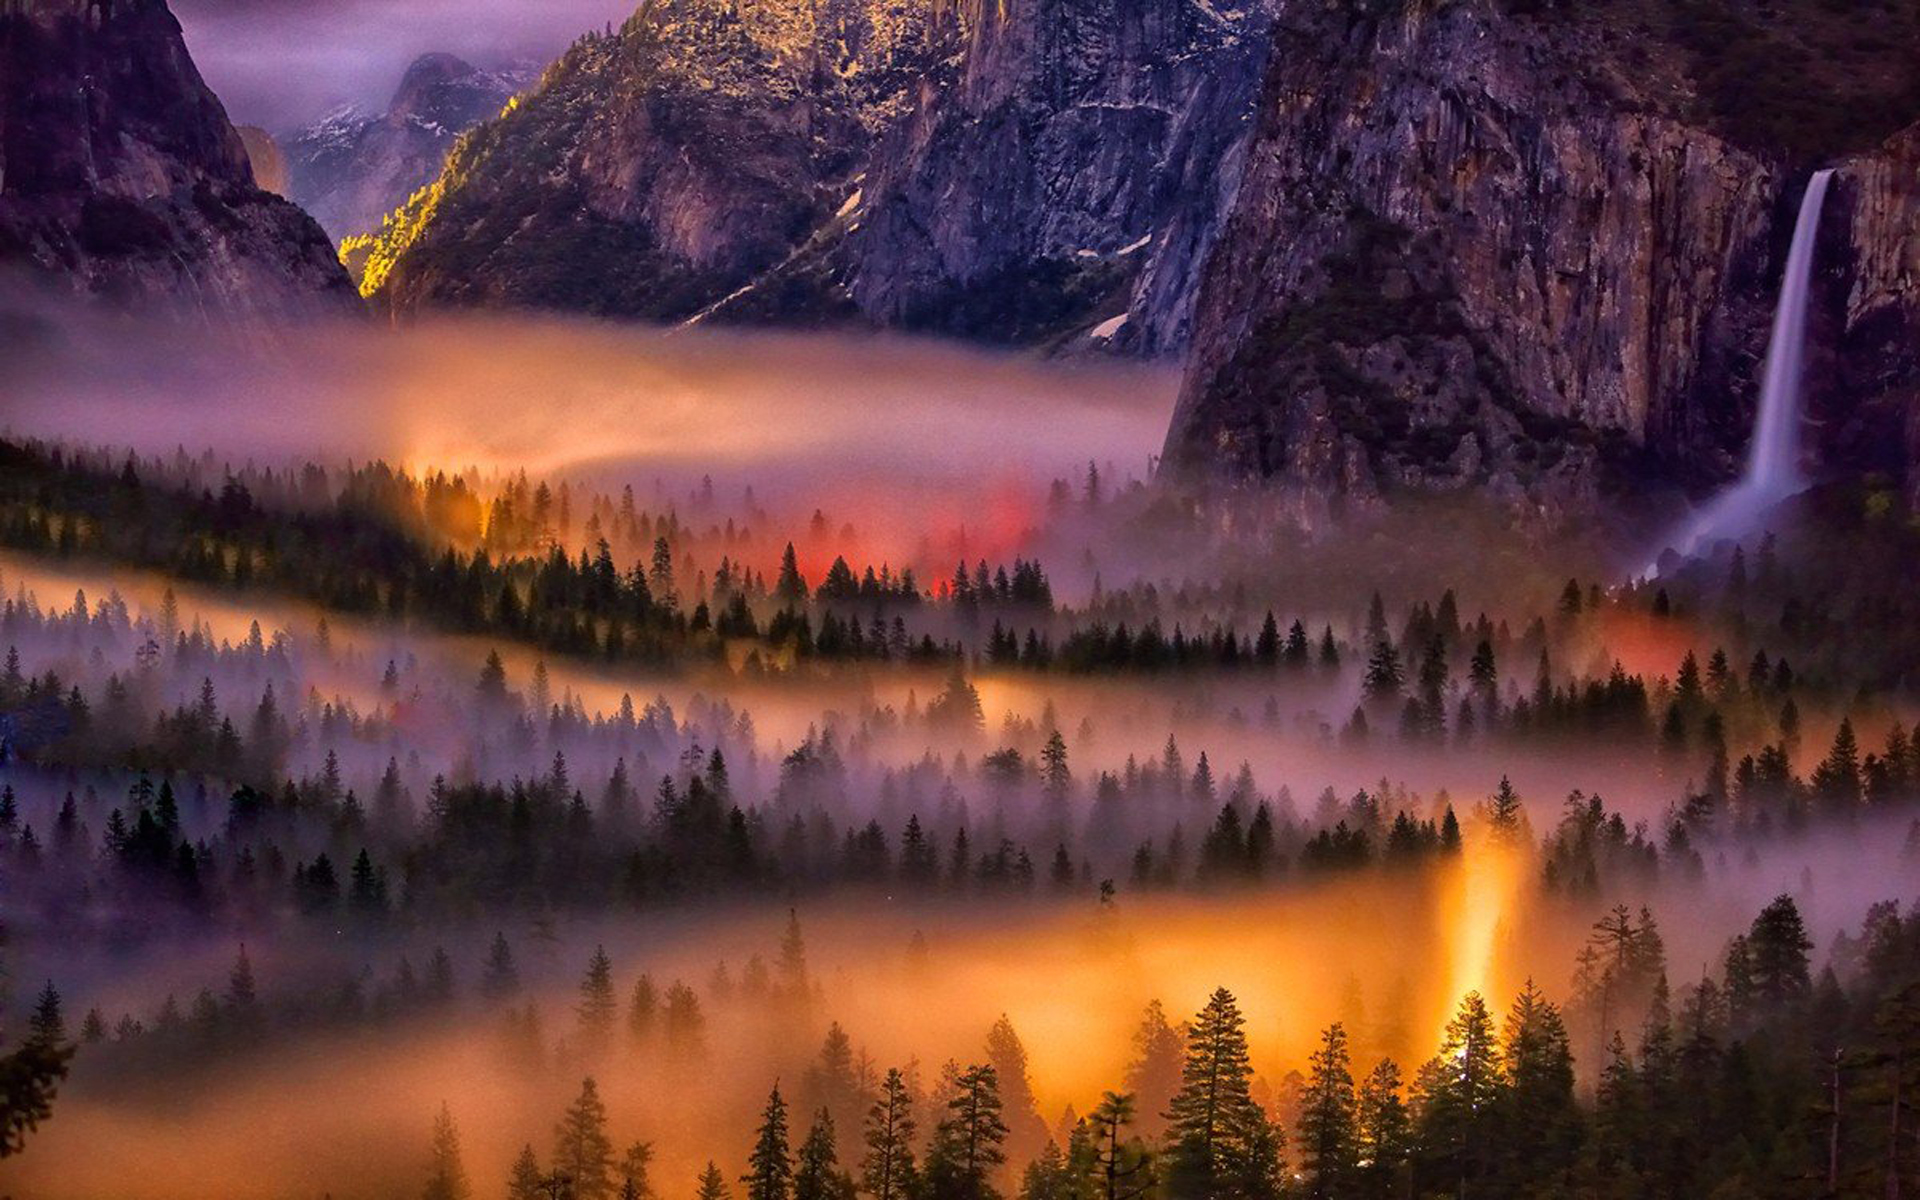 Best Photo In Photohop Fire Yosemite National Park Yosemite Valley